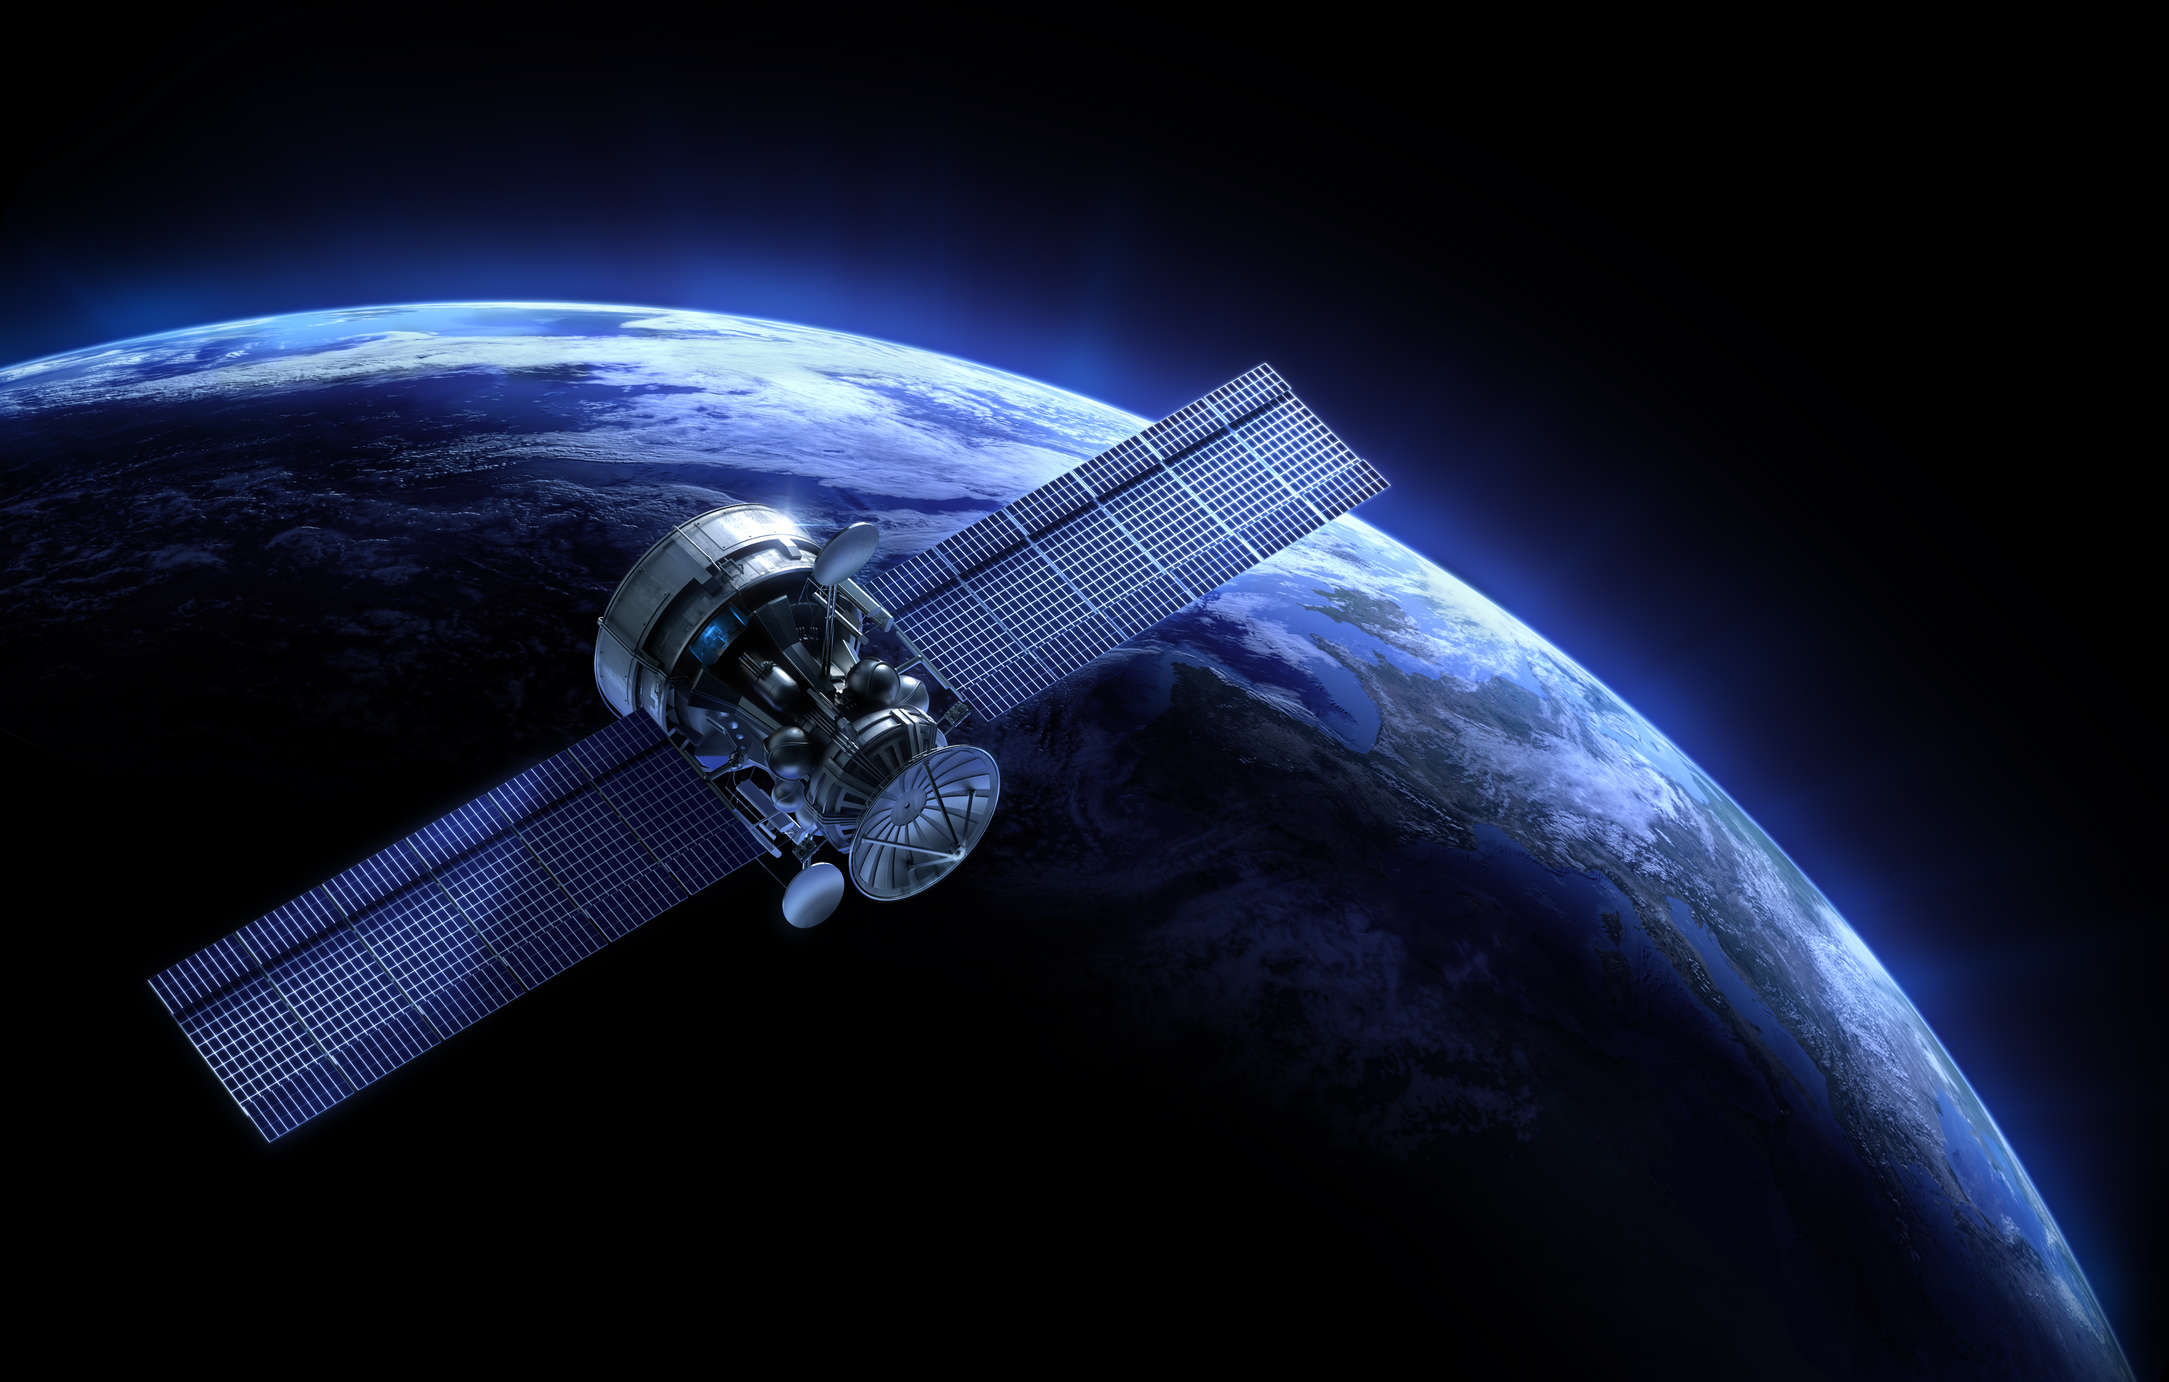 Satellite broadband service: US FCC approves Boeing bid